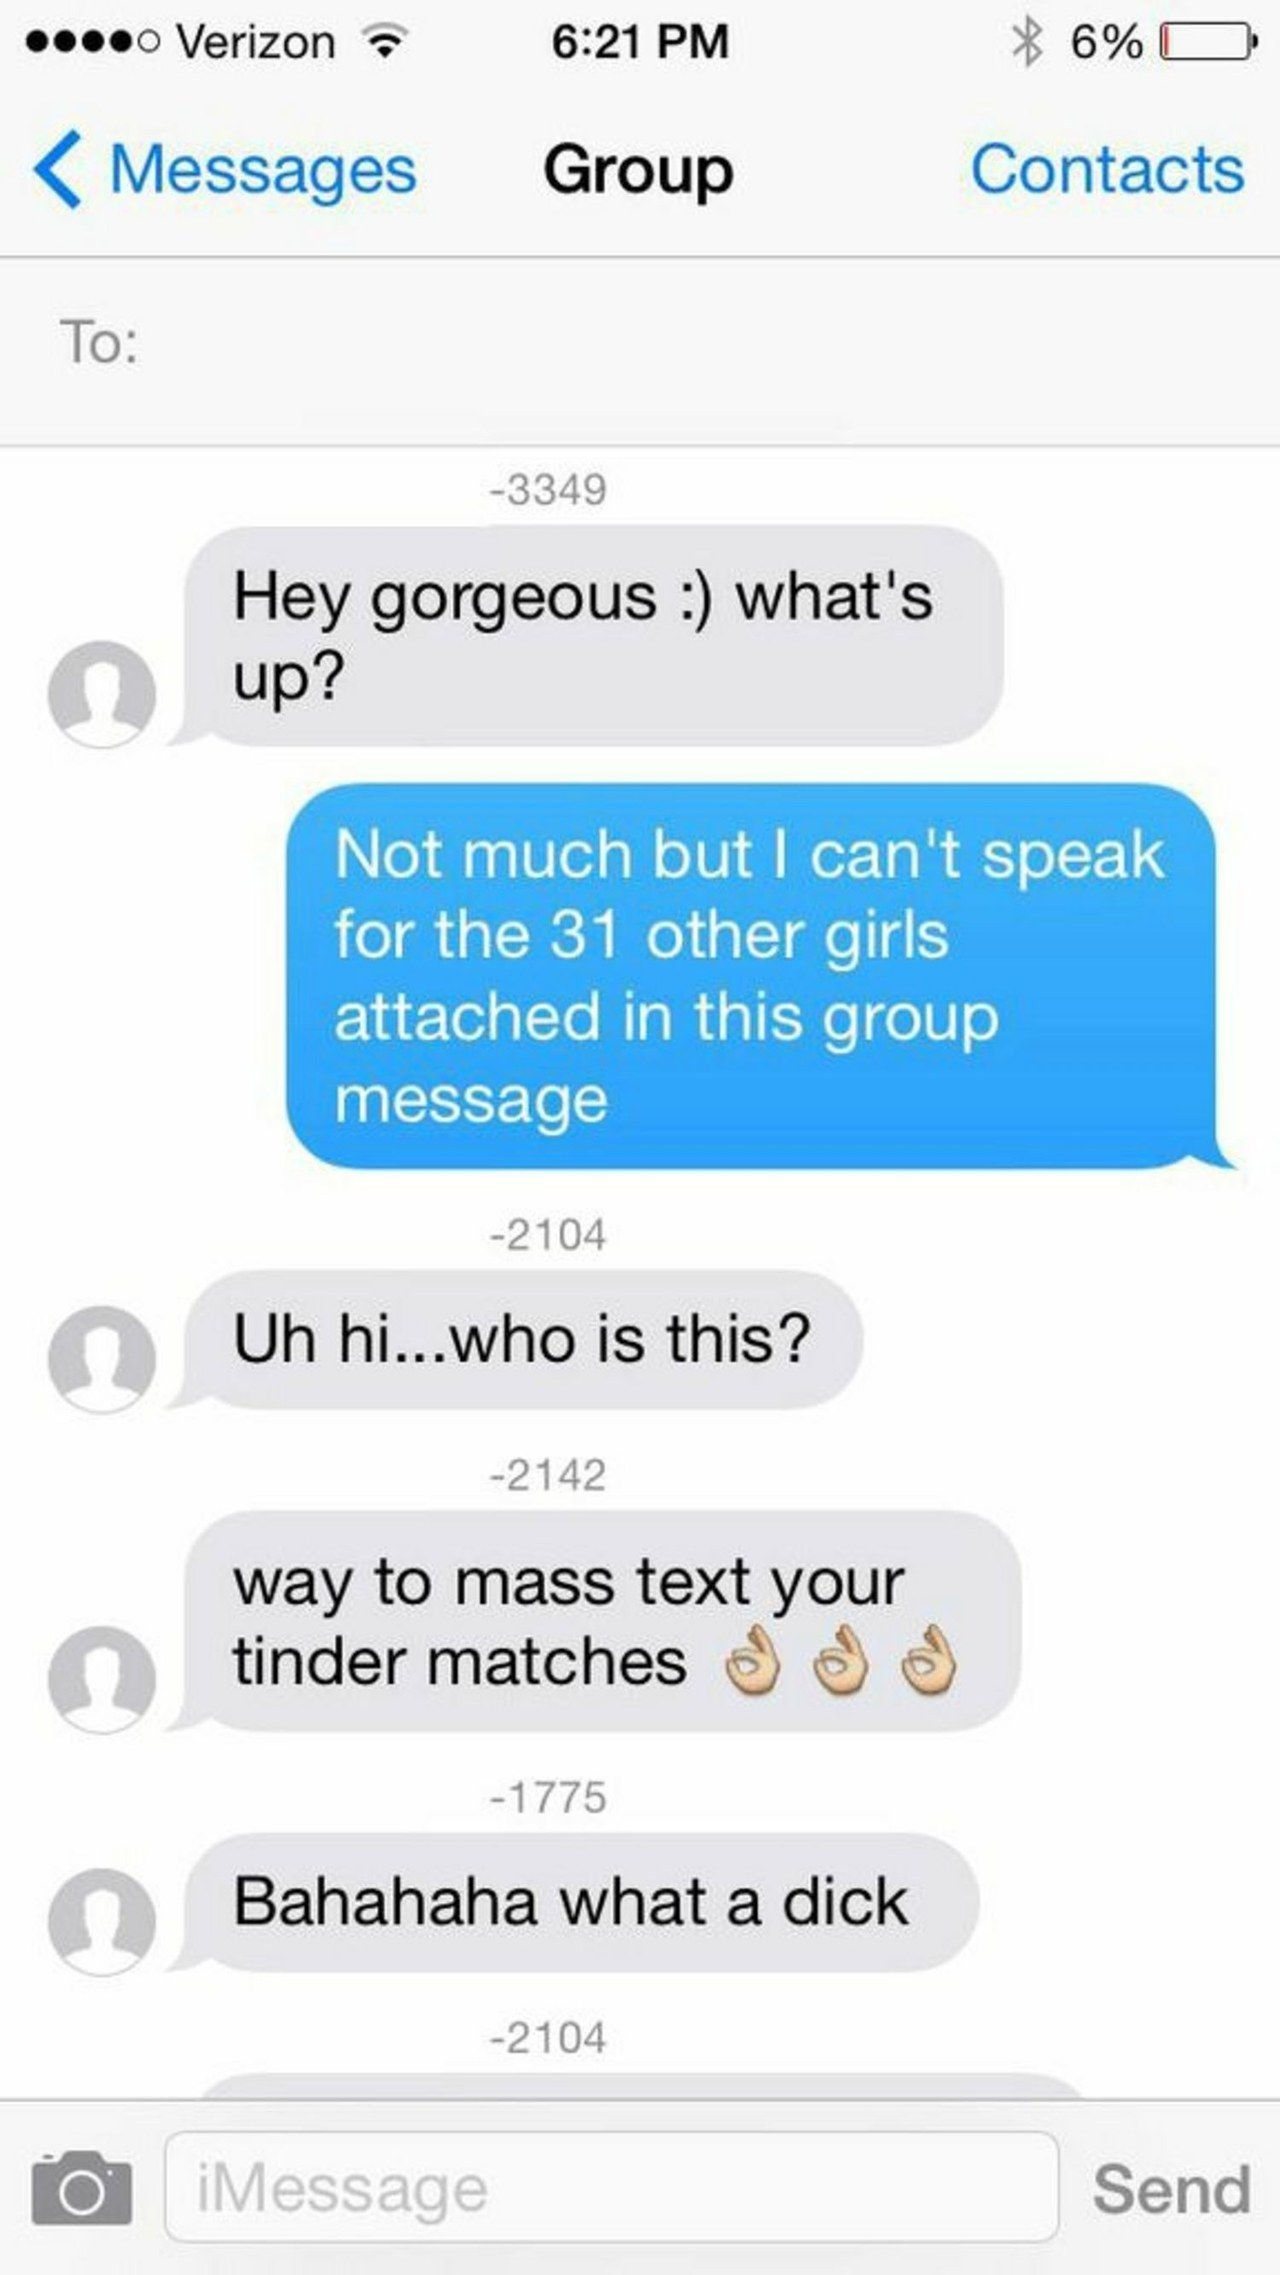 Tinder mass text